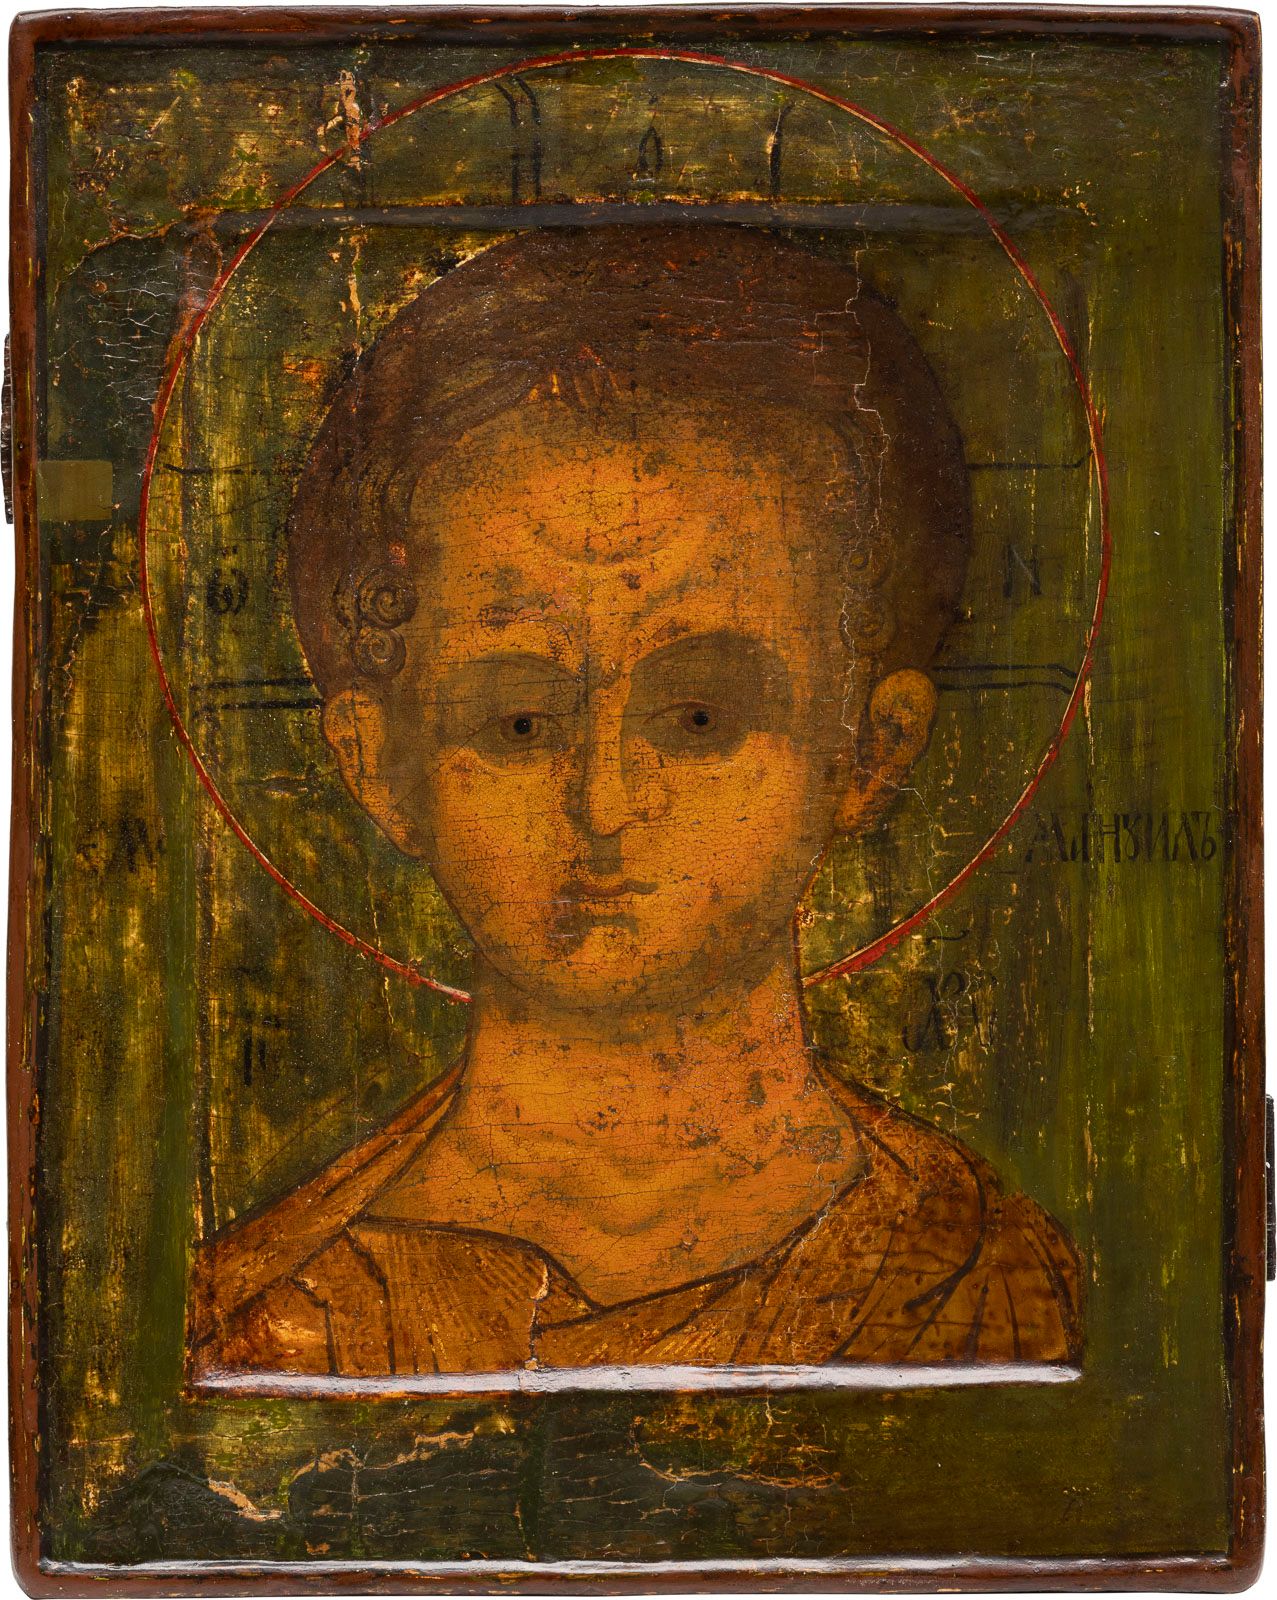 A FINE ICON SHOWING CHRIST EMMANUEL 表明耶稣基督的精美圣像 俄罗斯，约1600年 木板上的淡彩画，带有双科夫切格。半身像，以&hellip;